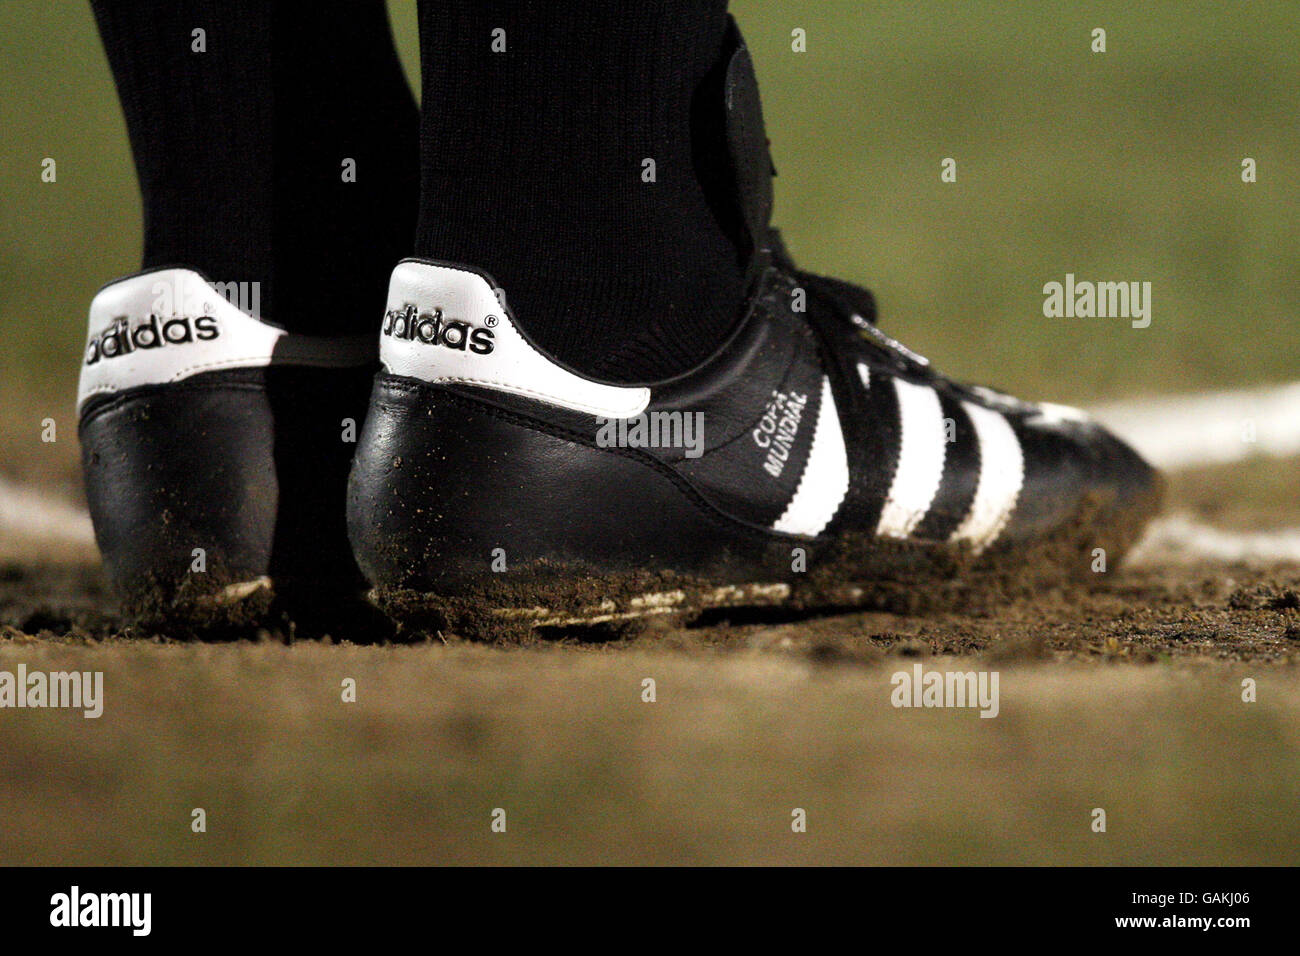 Asociación luto absorción Adidas copa fotografías e imágenes de alta resolución - Alamy